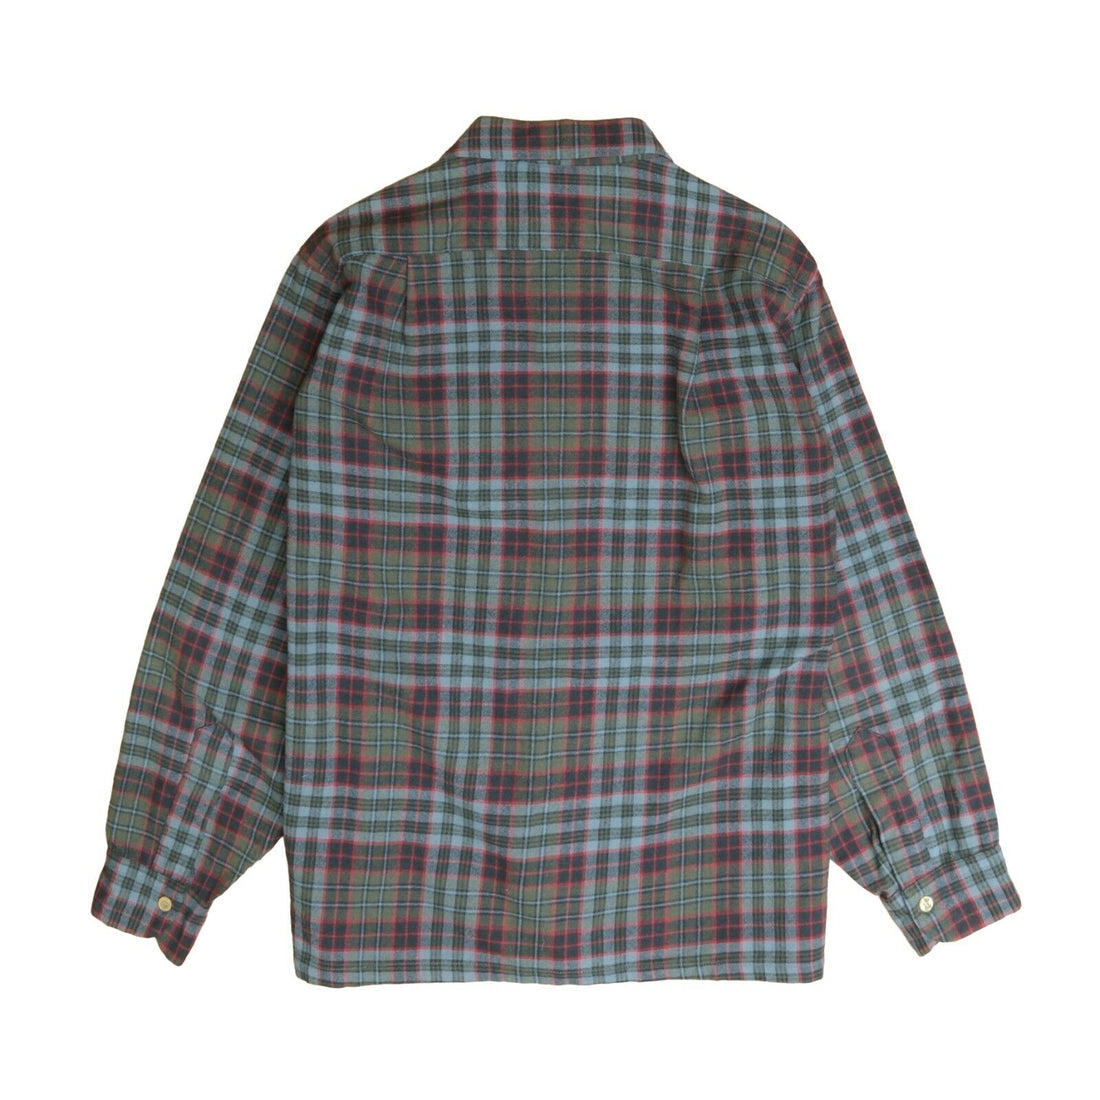 Vintage Pendleton Wool Board Button Up Shirt Large Green Plaid Long Sleeve